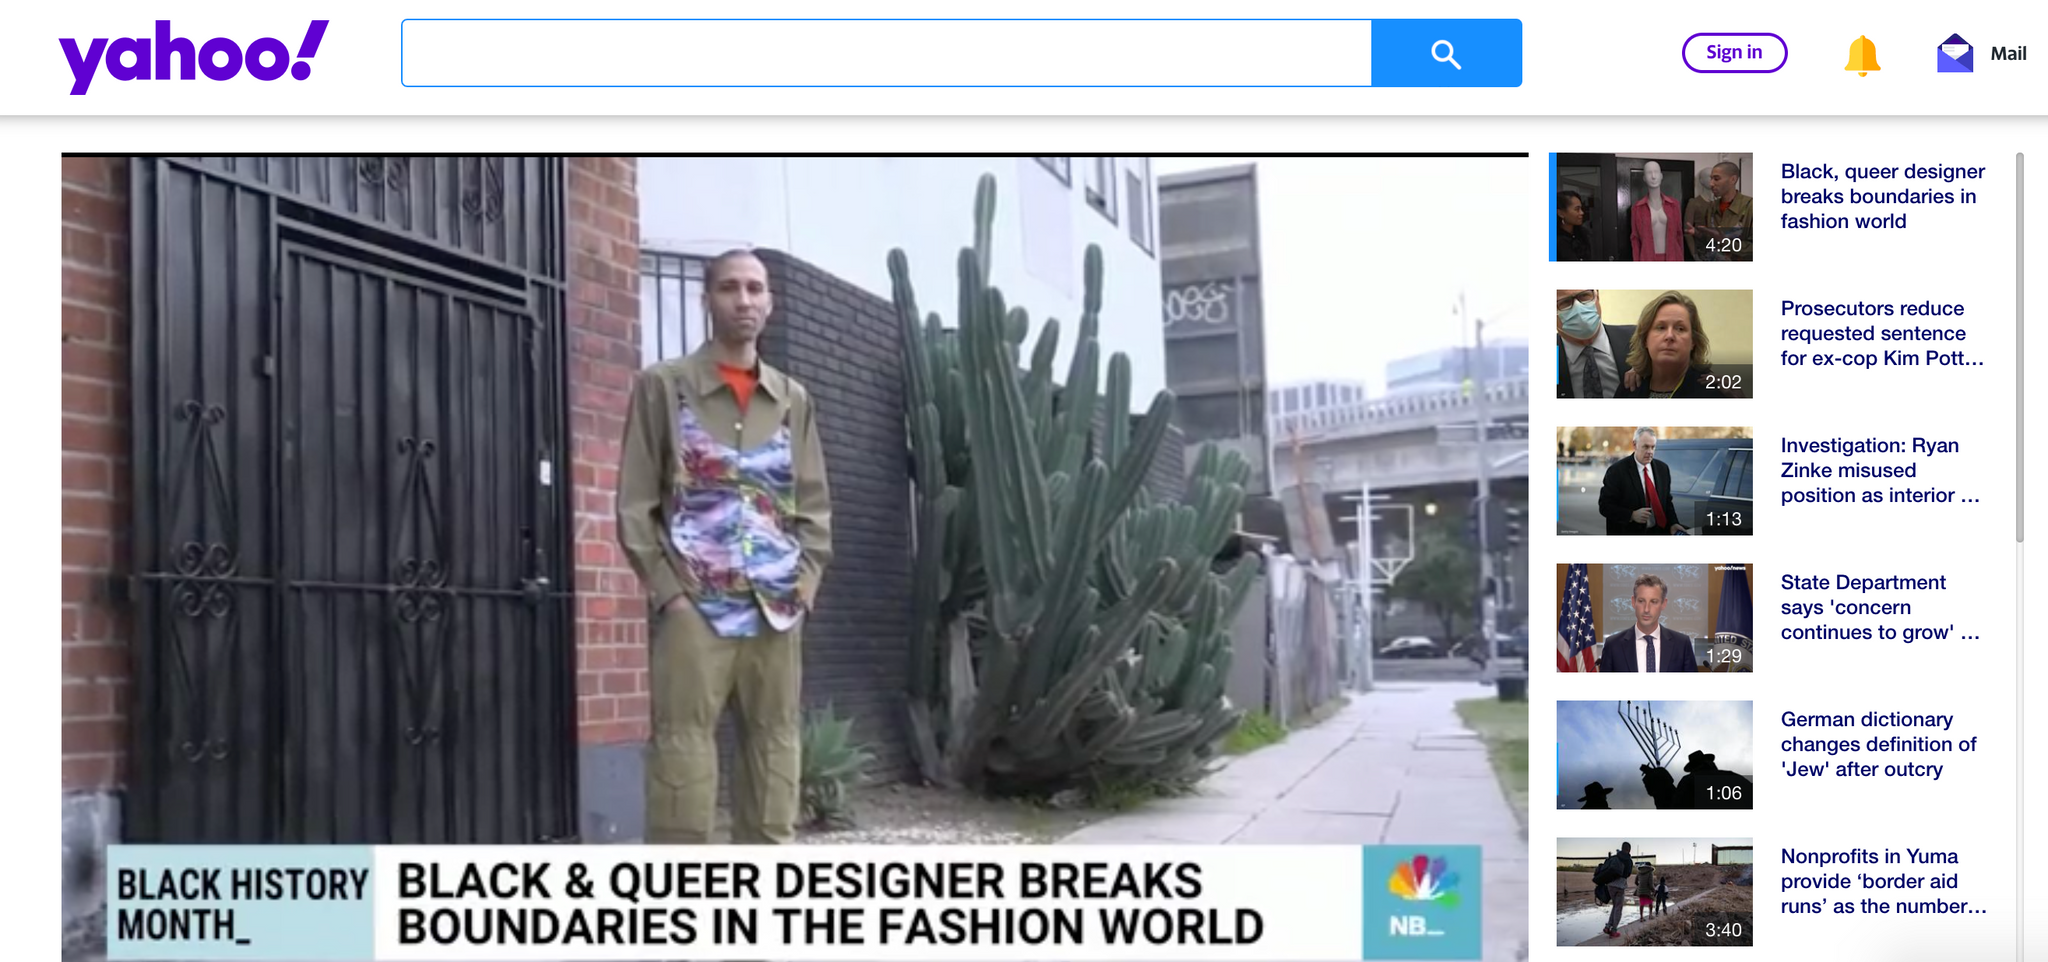 NBC News Interview: Black, Queer Designer Breaks Boundaries In Fashion World